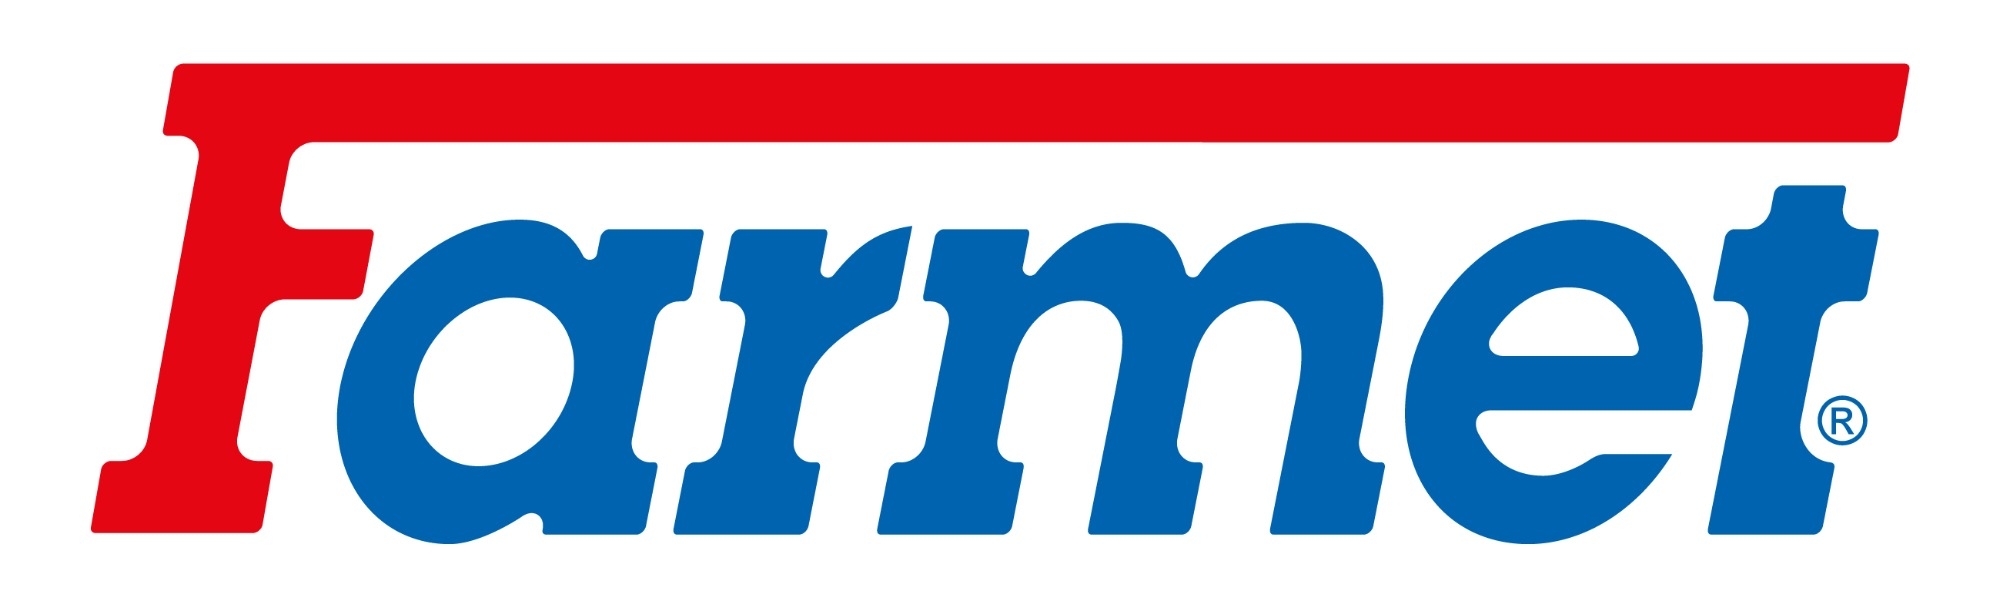 Farmet-Logo_07F3E